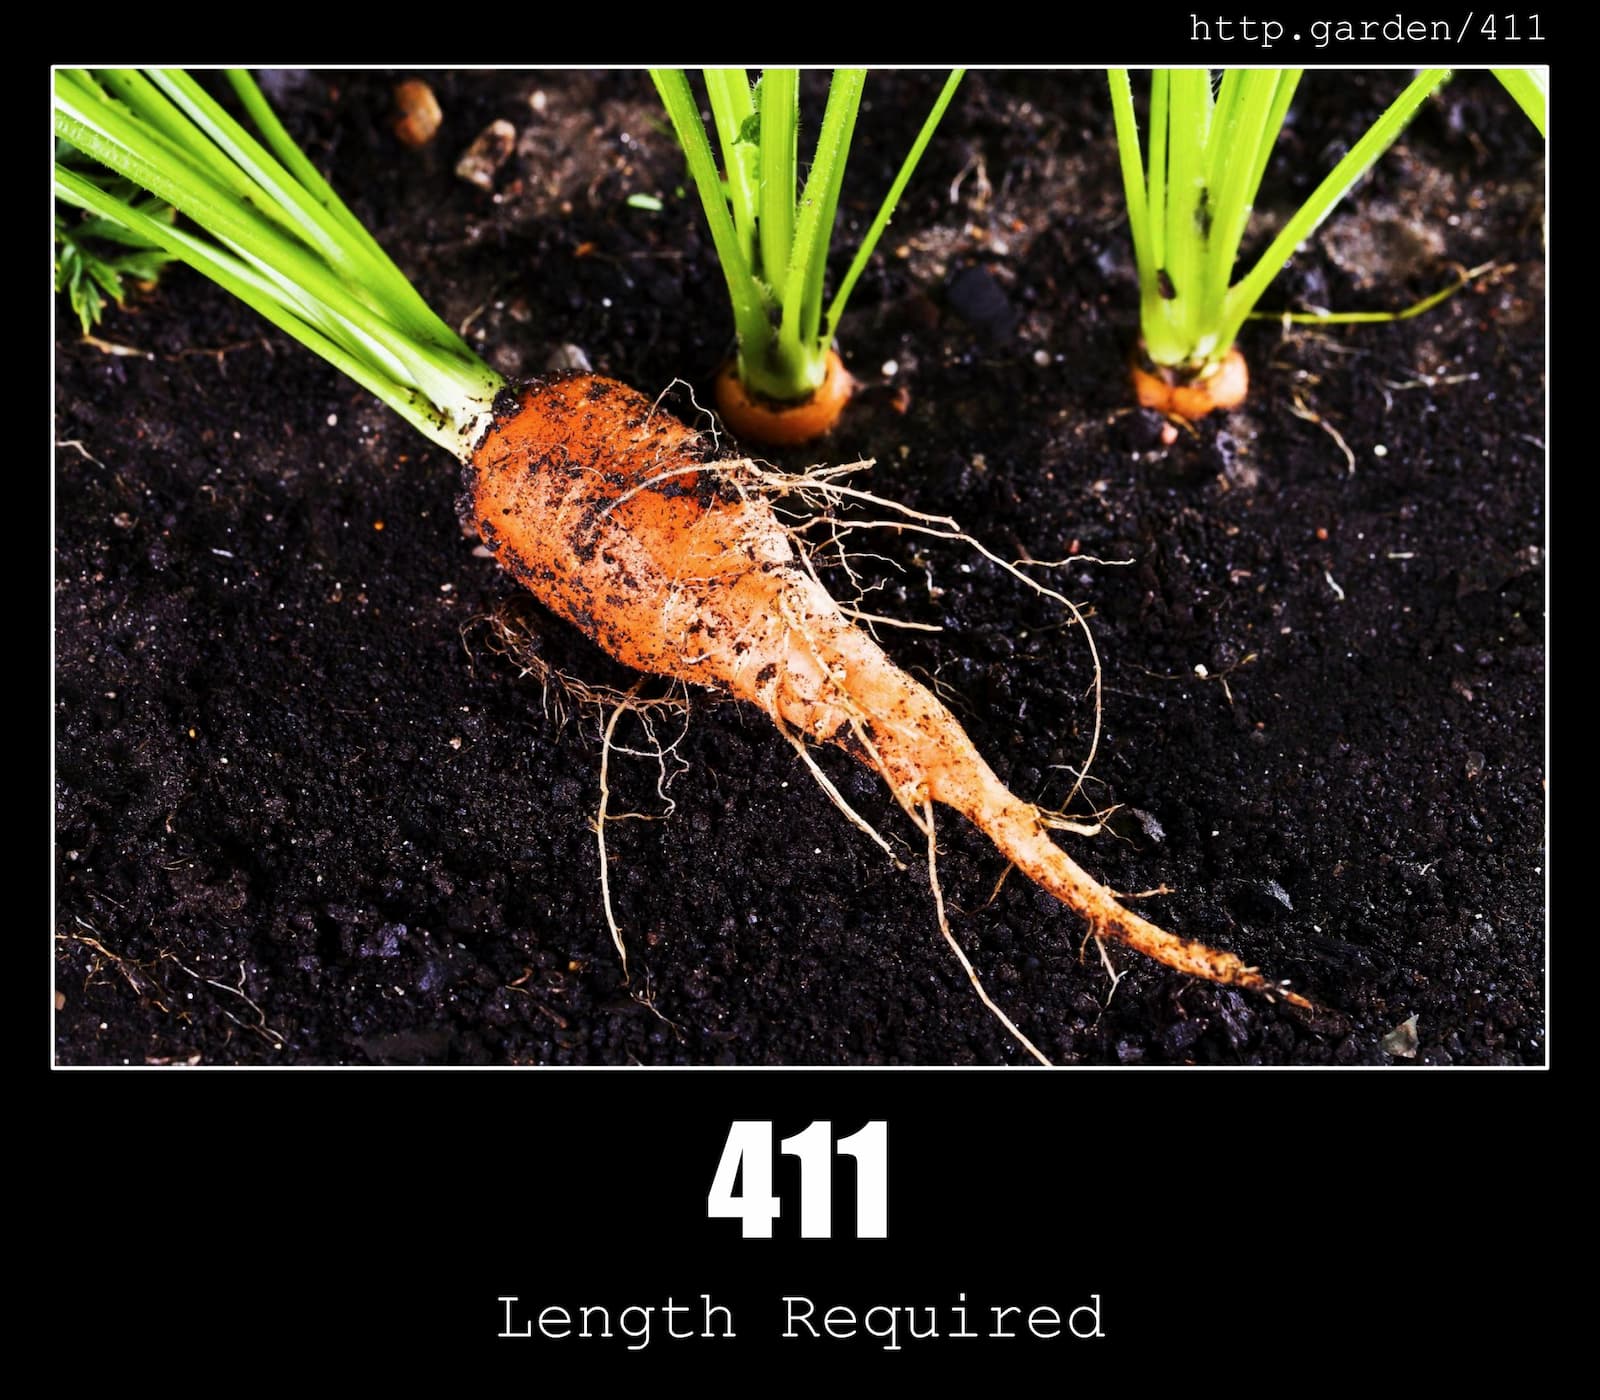 HTTP Status Code 411 Length Required & Gardening